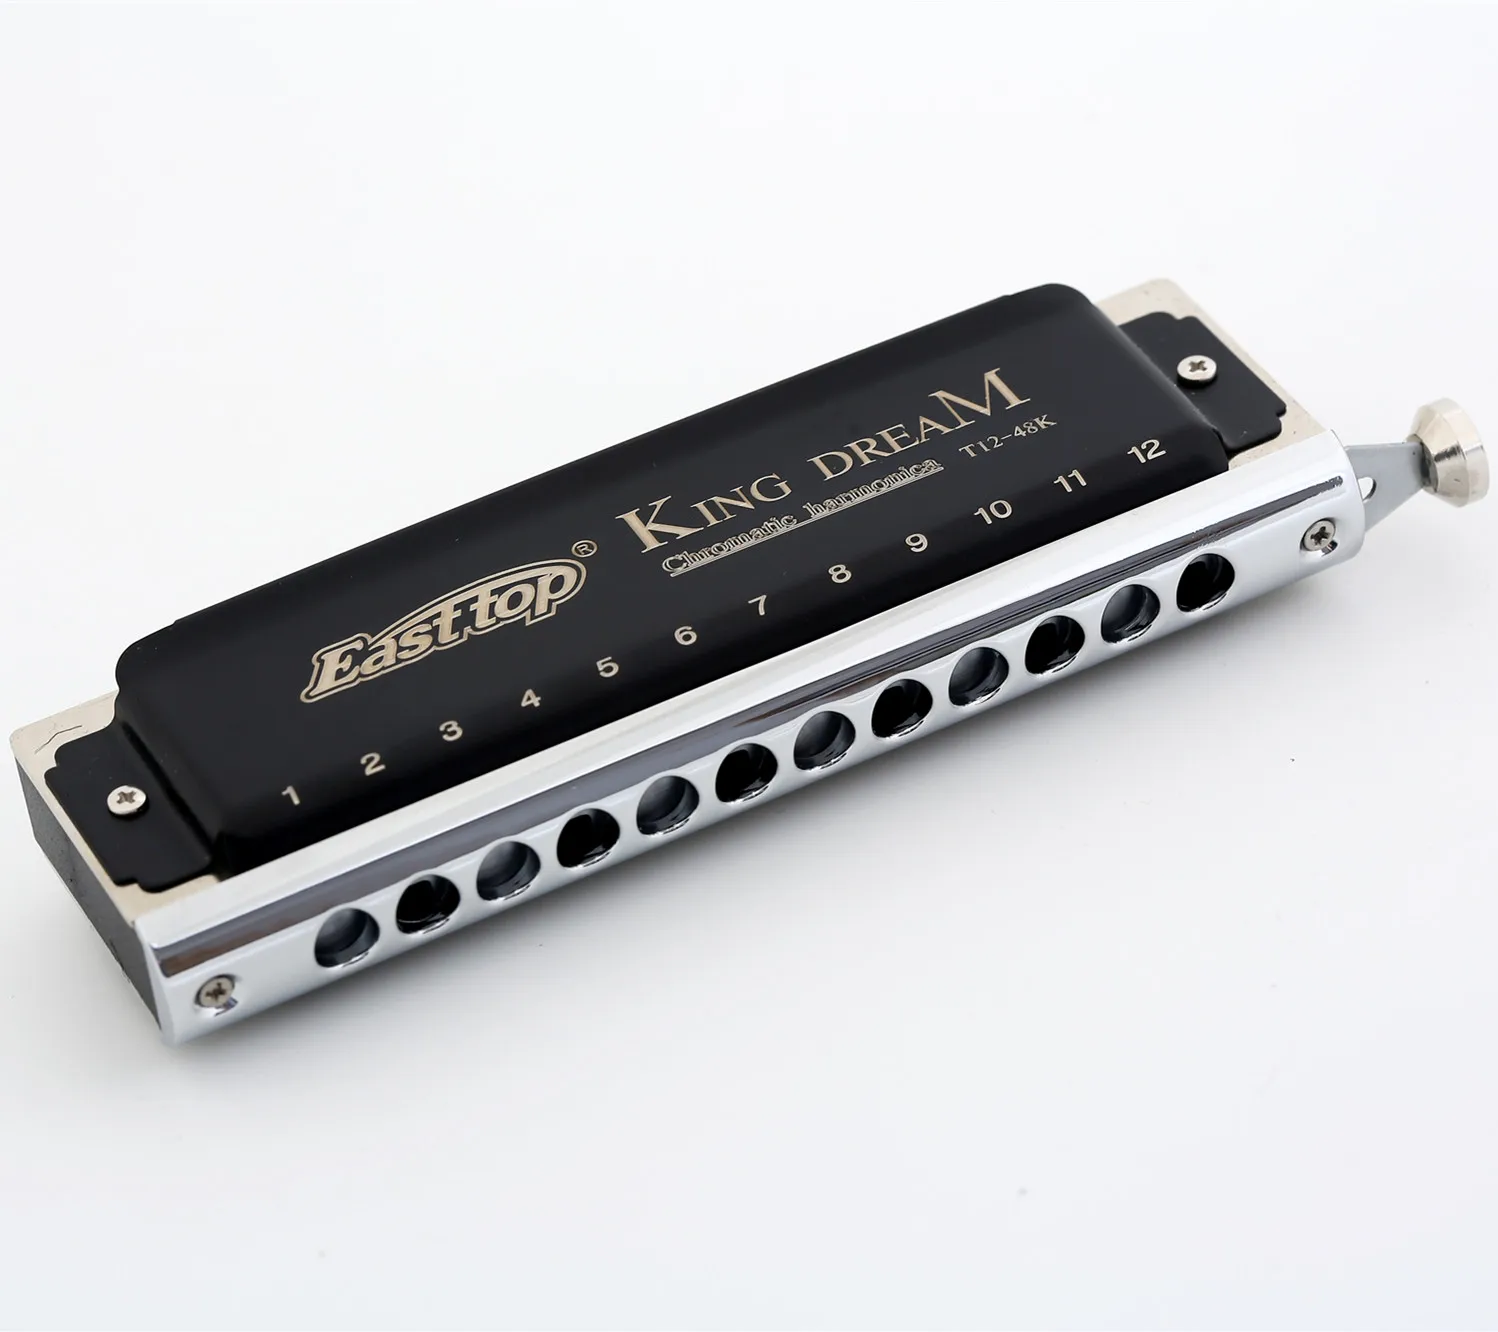 

T1248K easttop chromatic mouth organ harmonica easttop 12 hole 48 tone professional harmonica, Black